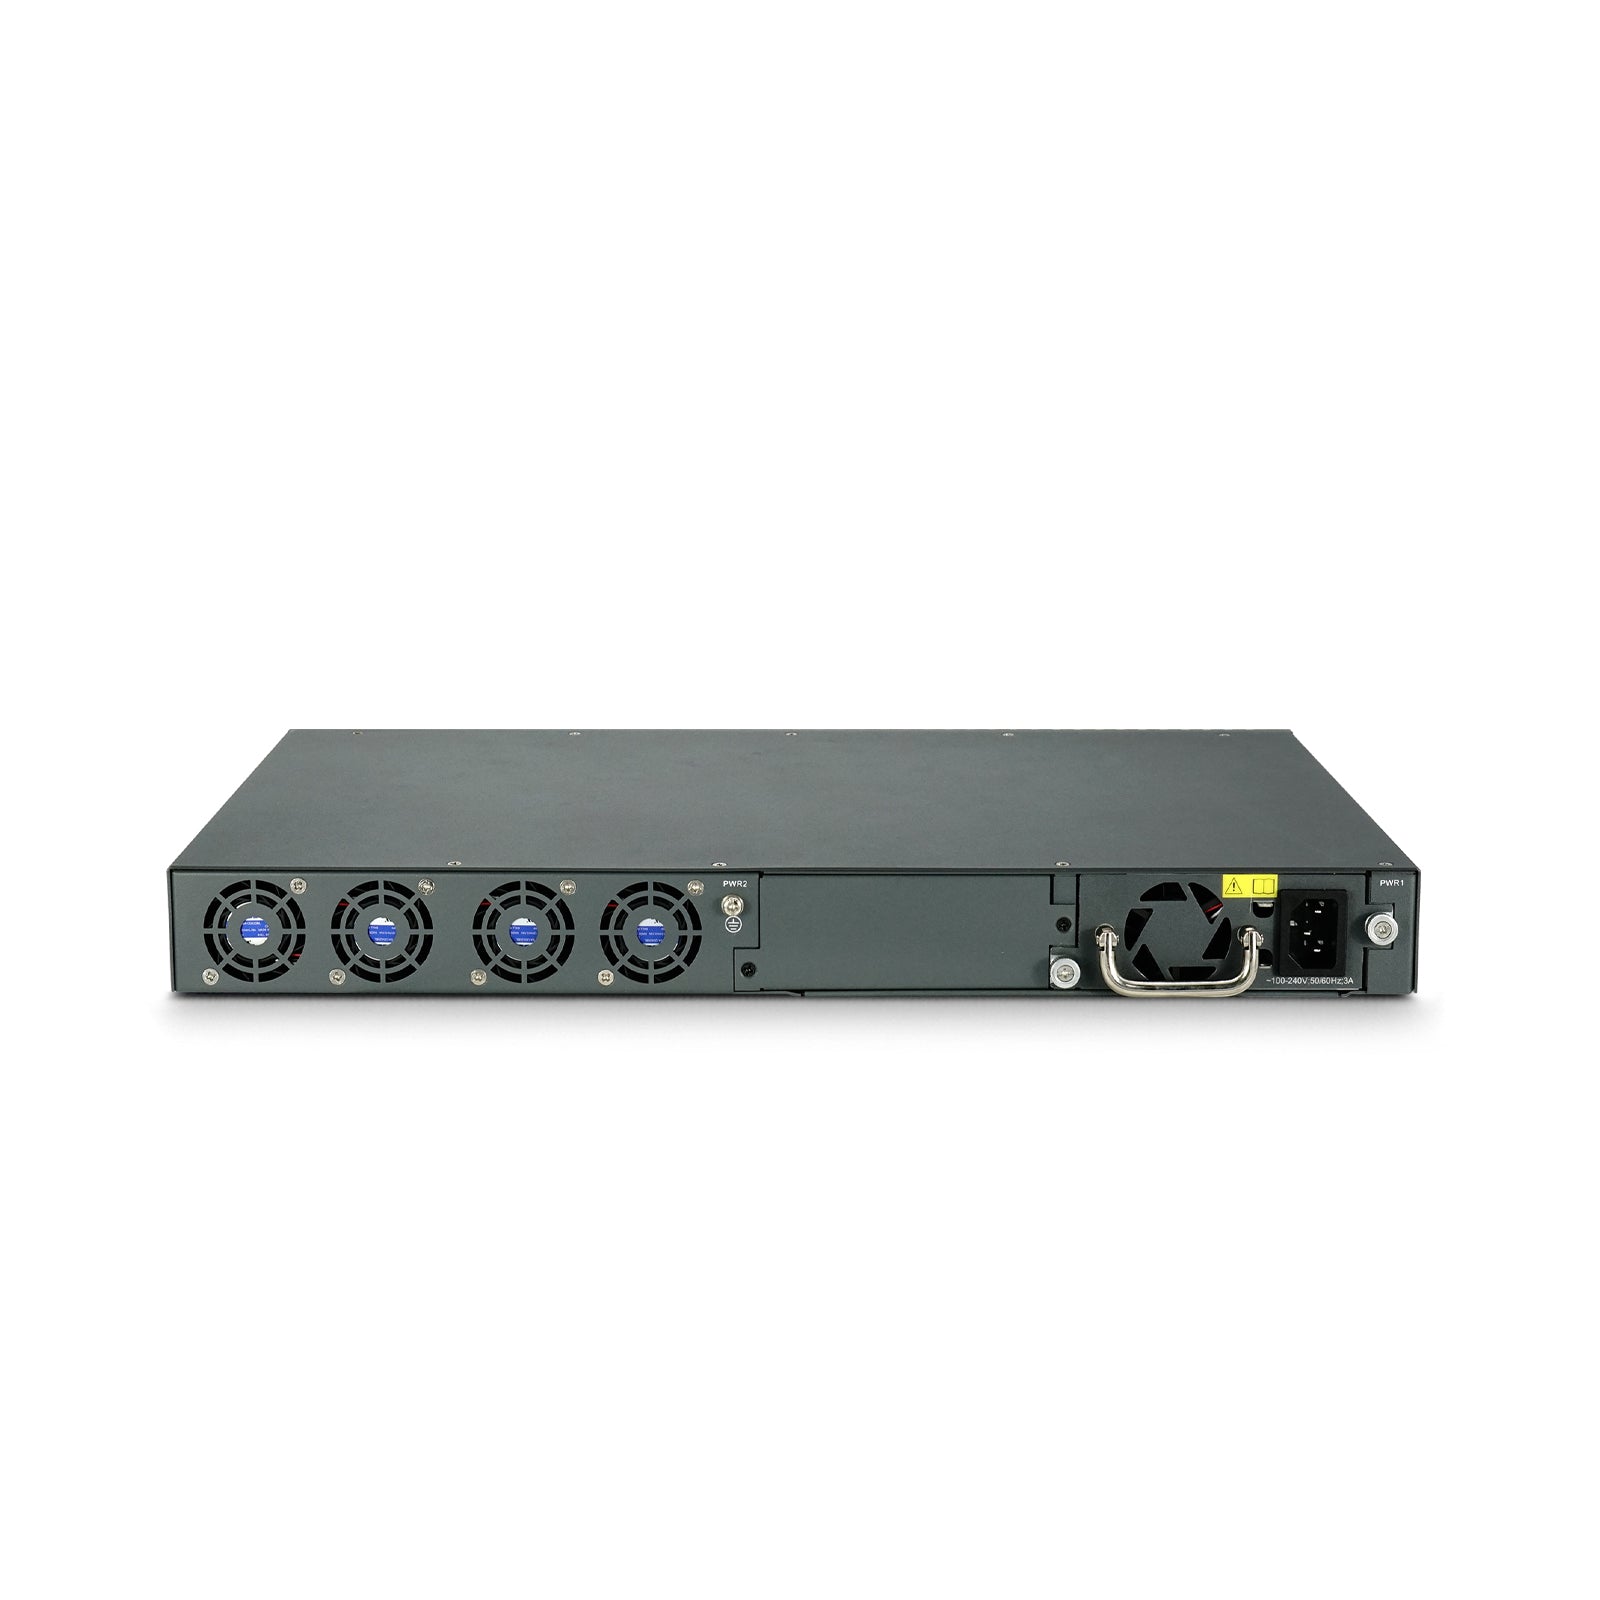 S7300-48TE4X2Q 48-Port Multi Gigabit L3 BGP Switch with 48x 100M/1000M/2.5GBASE-T RJ45, with 4x1G/10G SFP+ and 2x 40G QSFP+ Uplink Ports